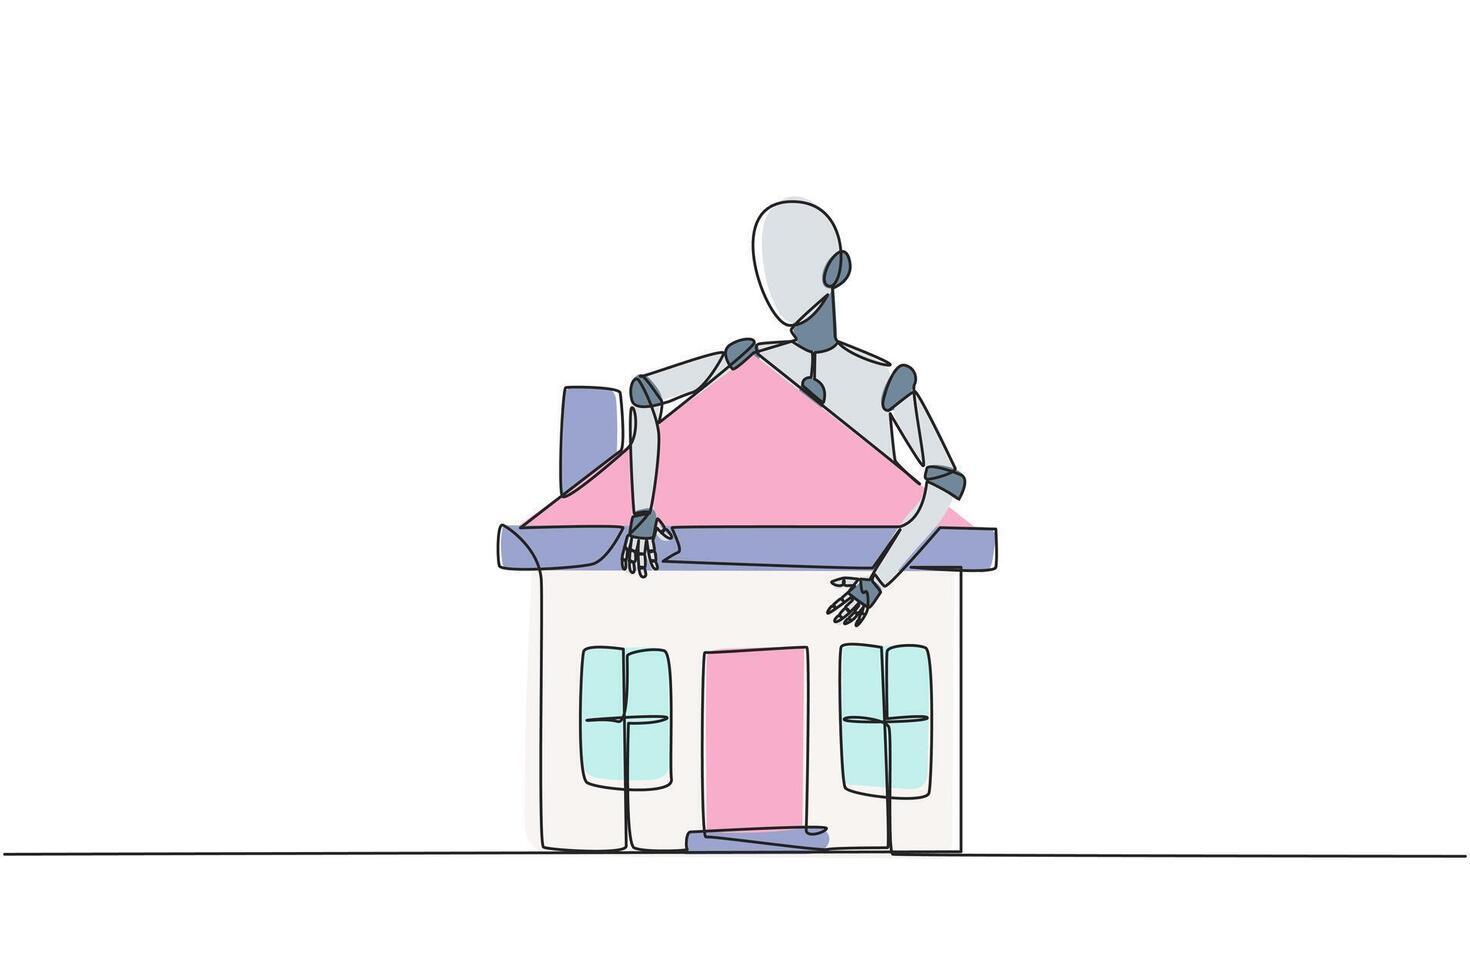 soltero continuo línea dibujo robot abrazando miniatura casa. su artificial inteligencia es poder a con rapidez construir miniatura casas futuro tecnología desarrollo. uno línea diseño vector ilustración